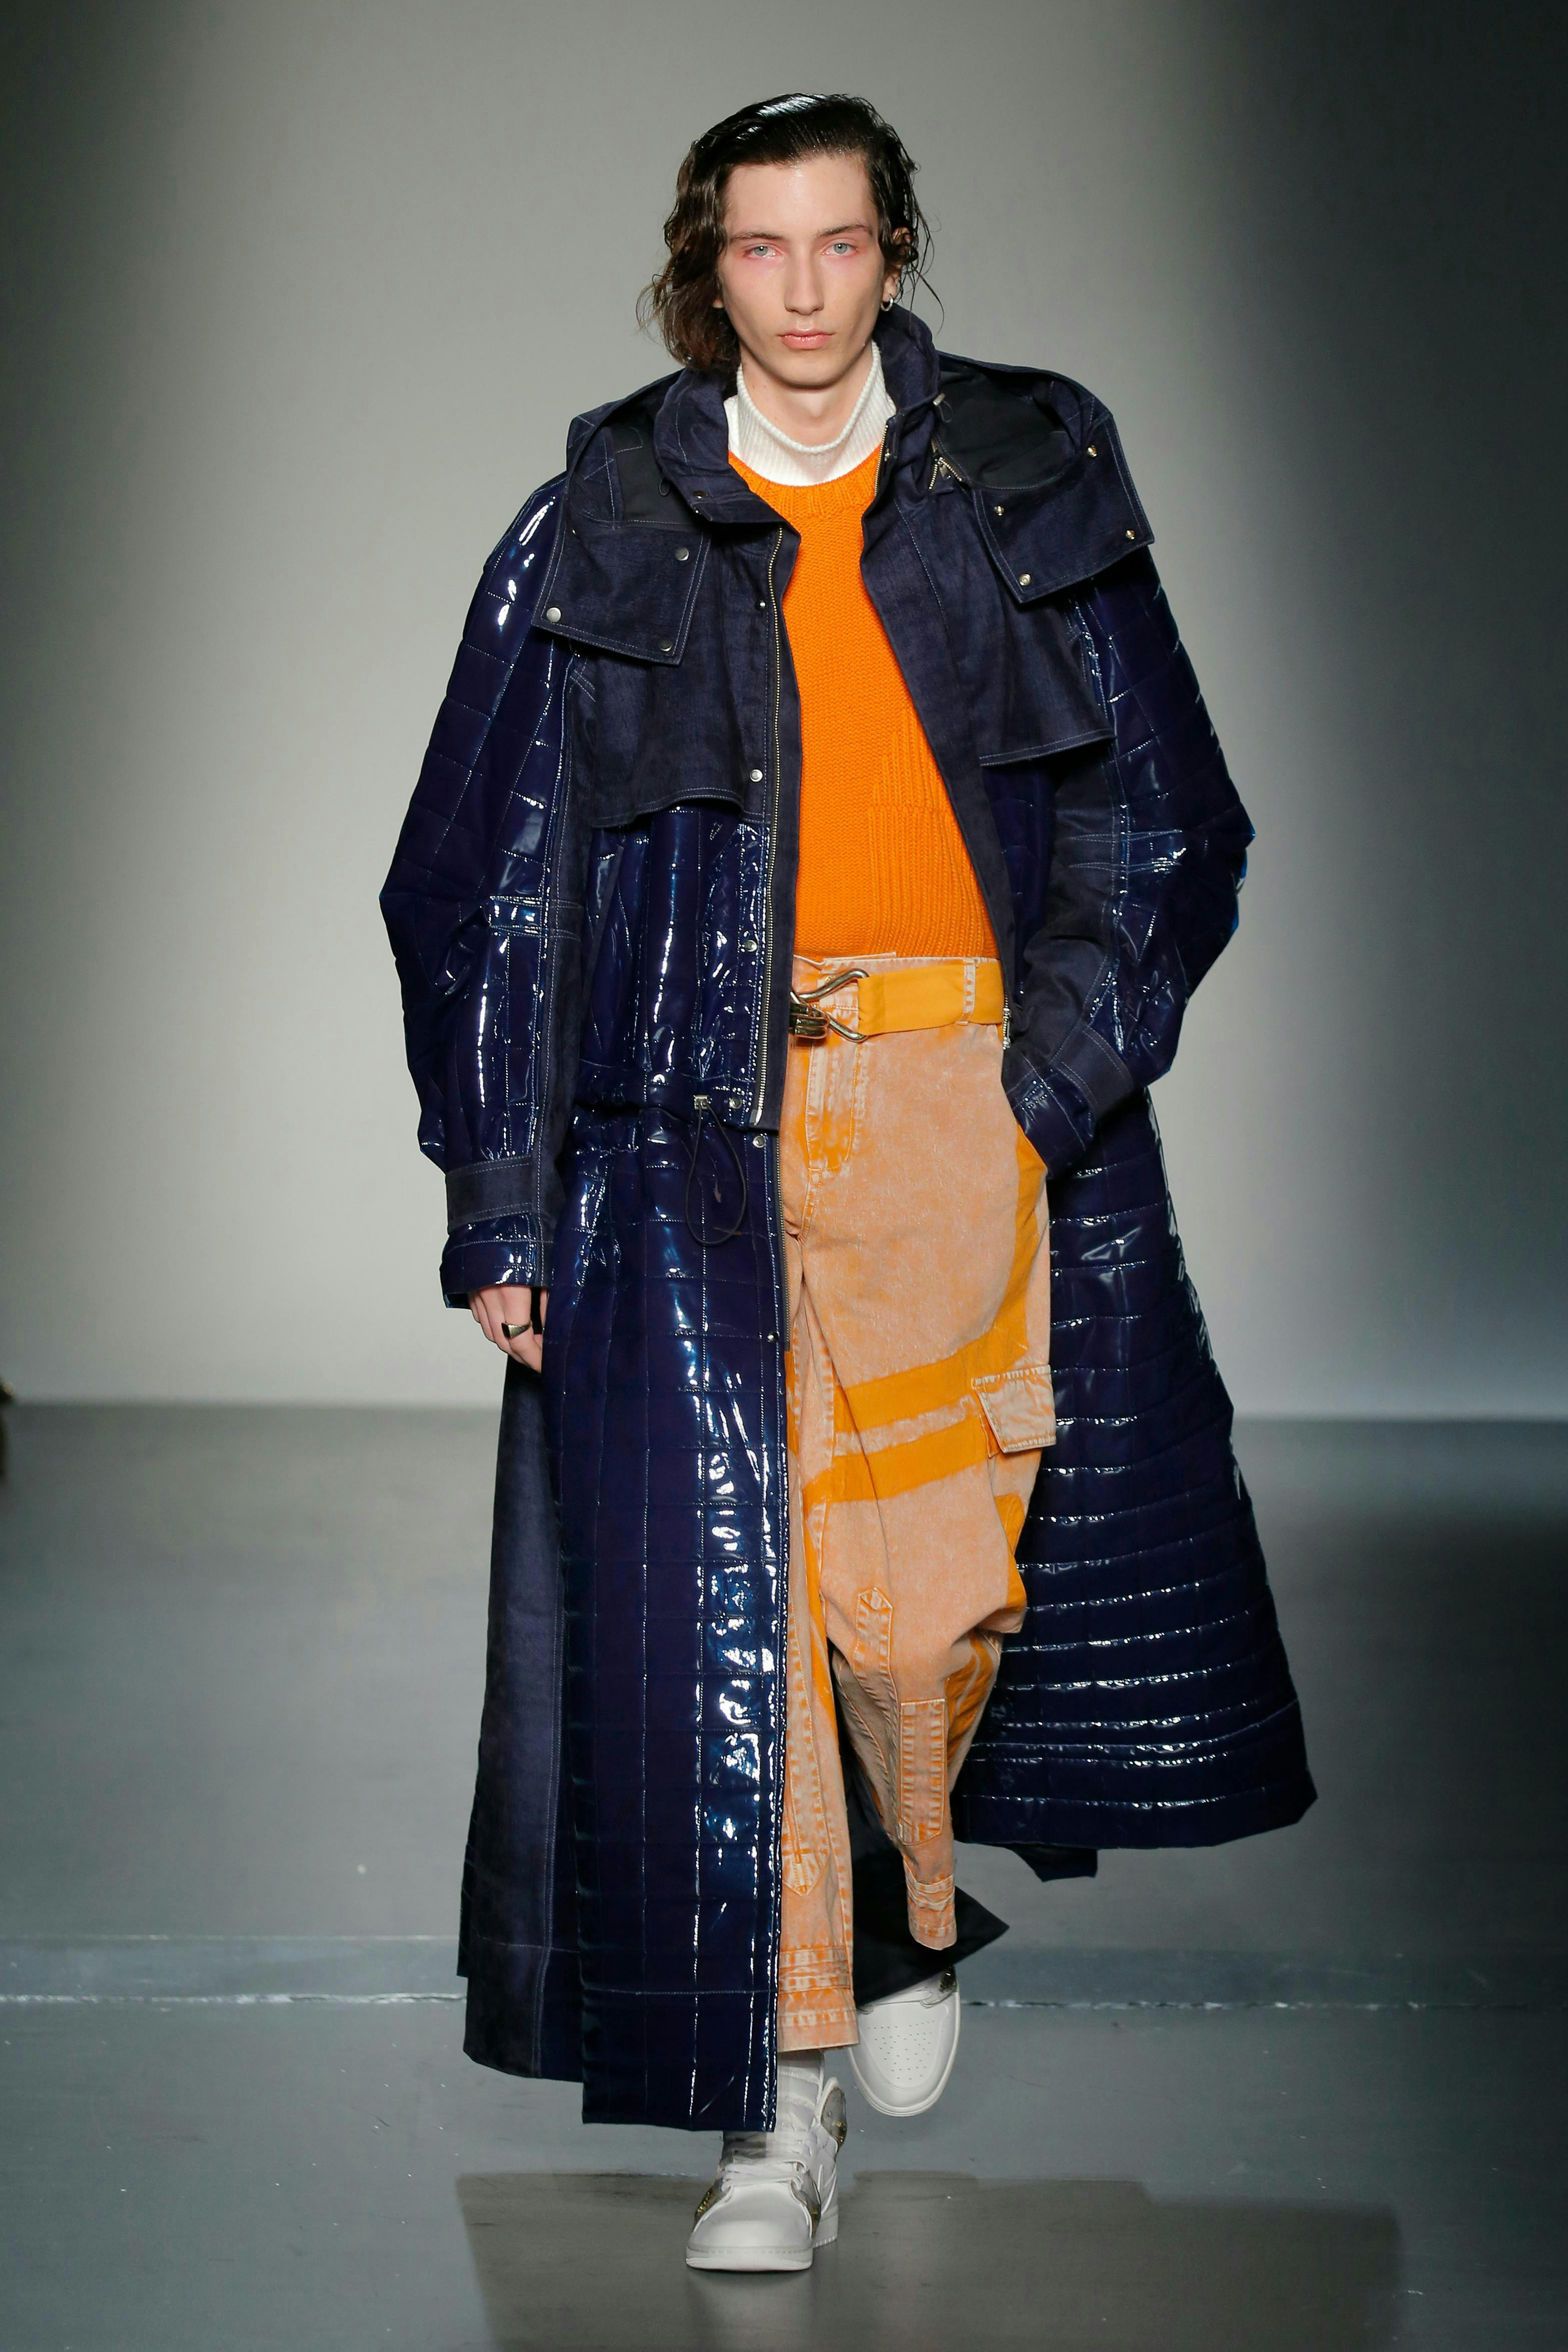 feng chen wang new york fashion week fw18 02/06/2018 clothing apparel coat overcoat sleeve person human